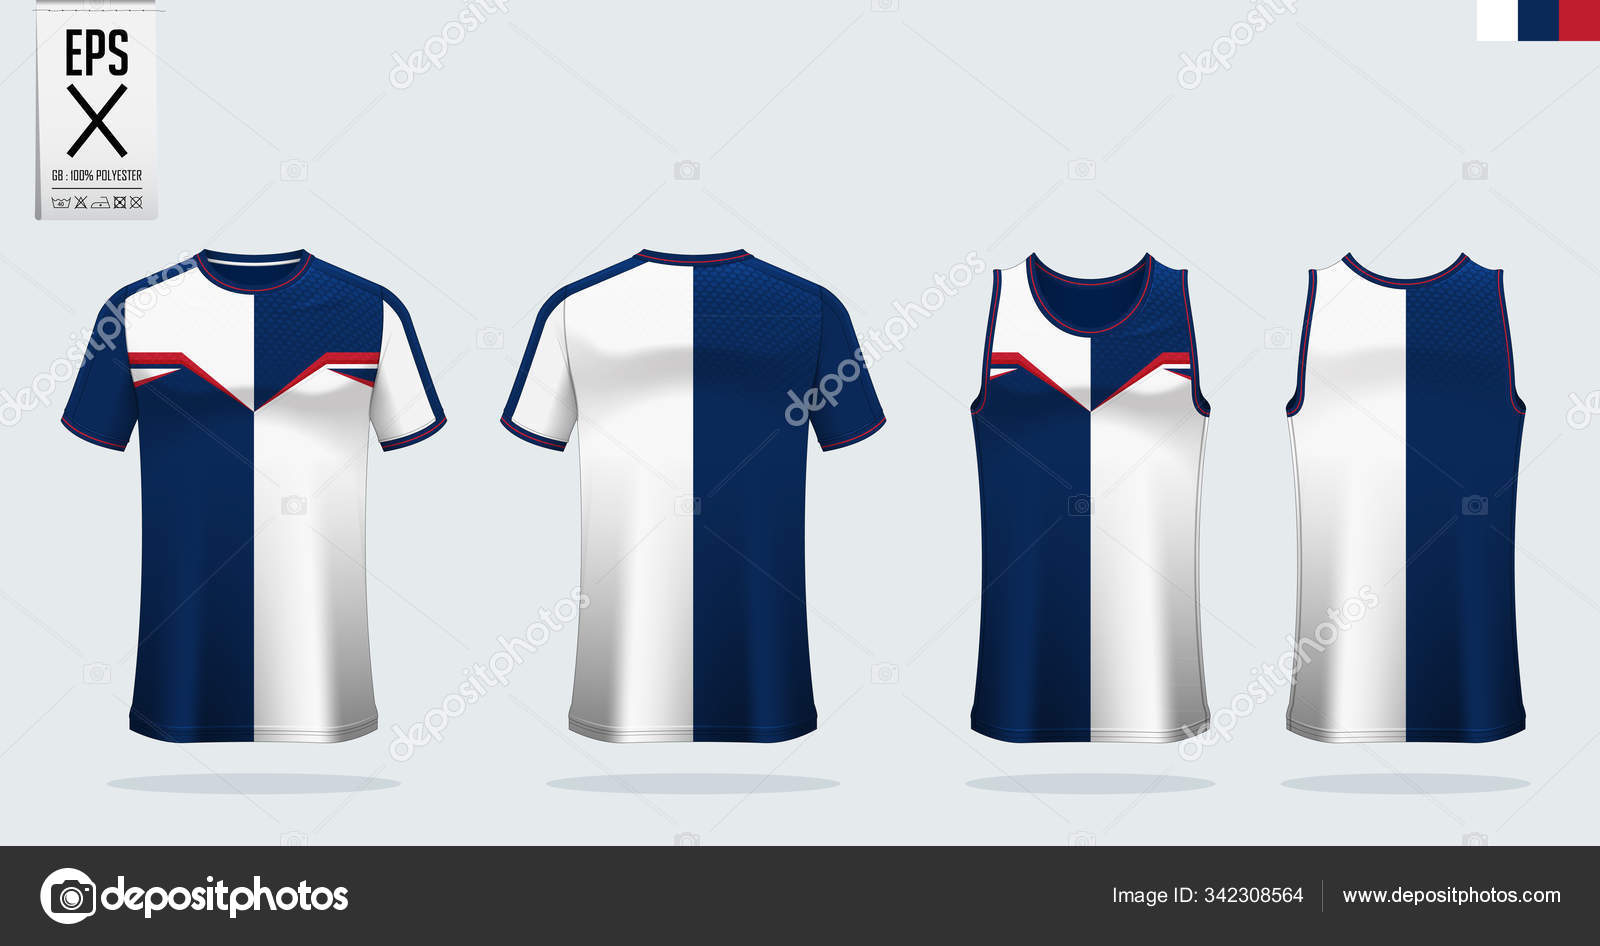 Blue-Red-White Sport Shirt Design Template for Soccer Jersey